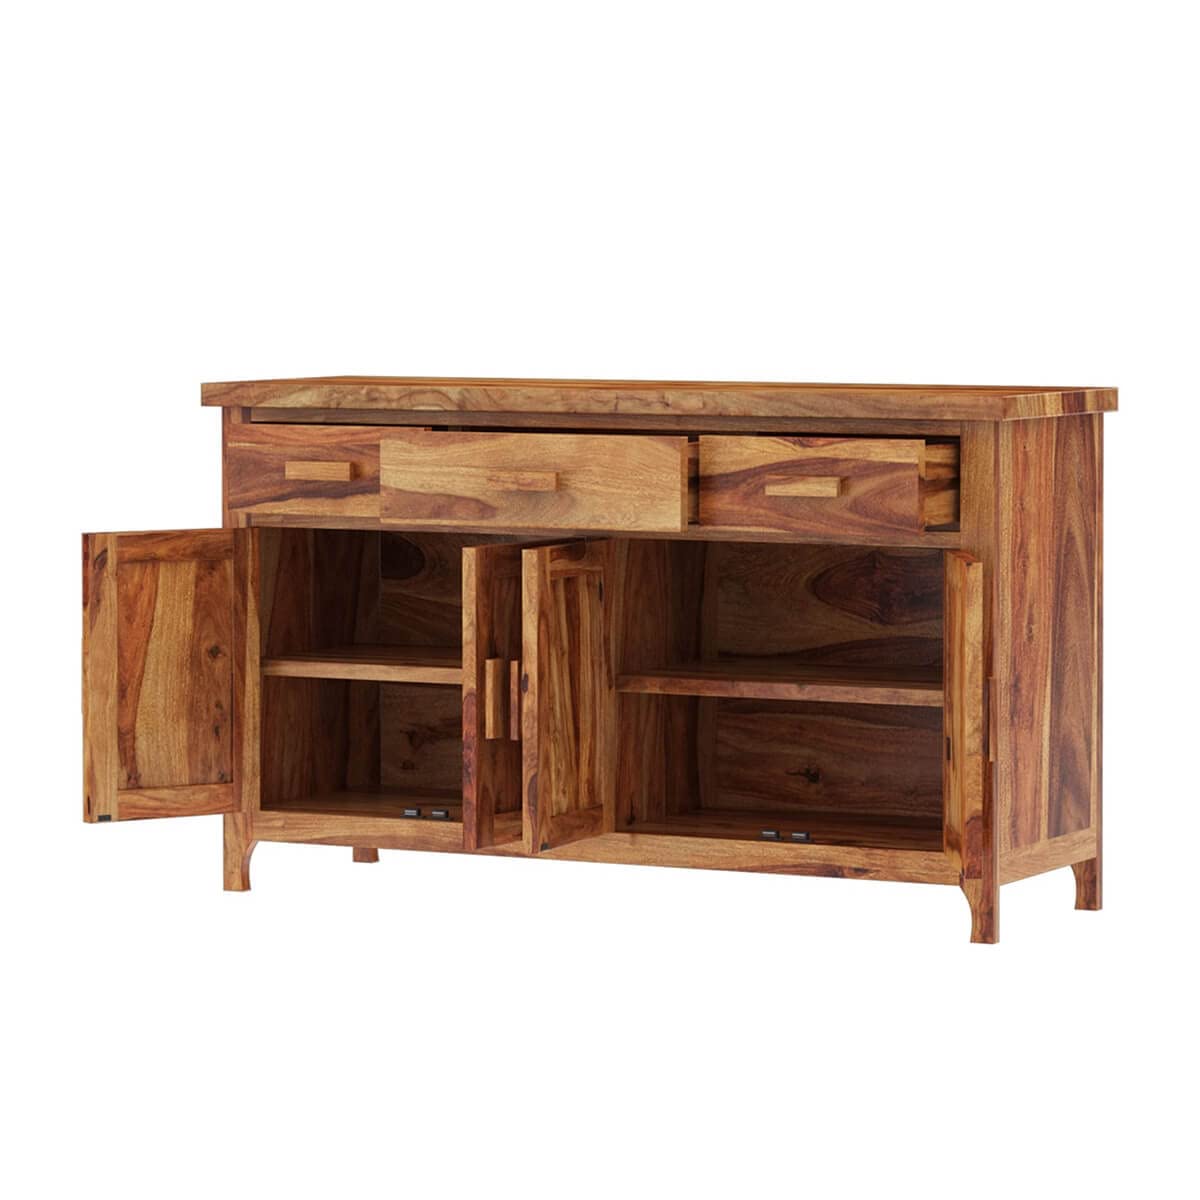 Woodmarwar Solid Sheesham Wood Sideboard With Storage for Living Room Furniture